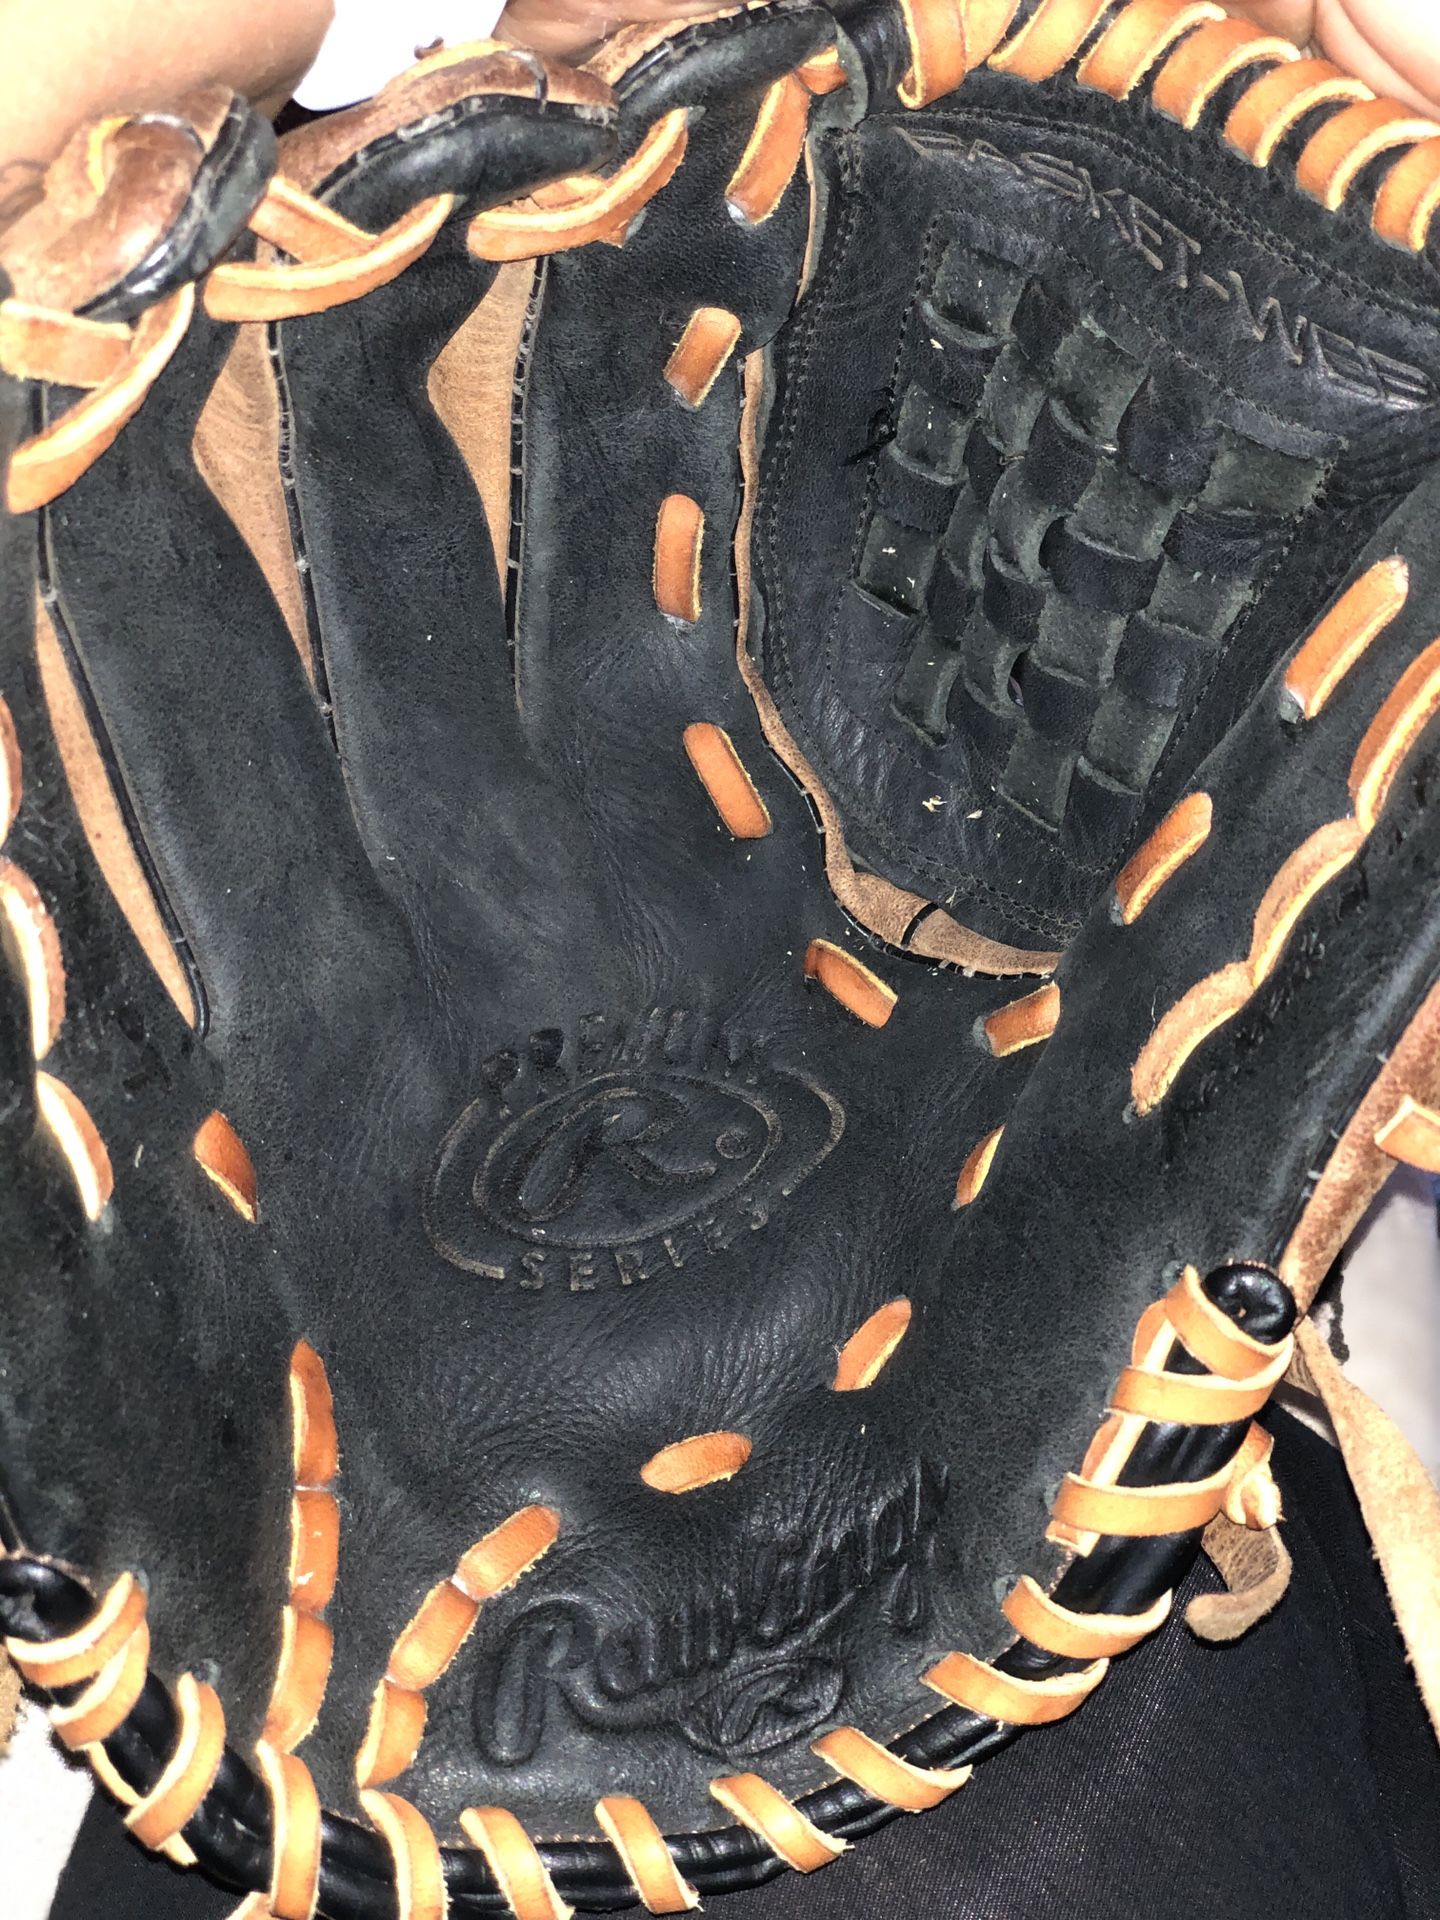 Rawlings Leather Lefthand Baseball Glove